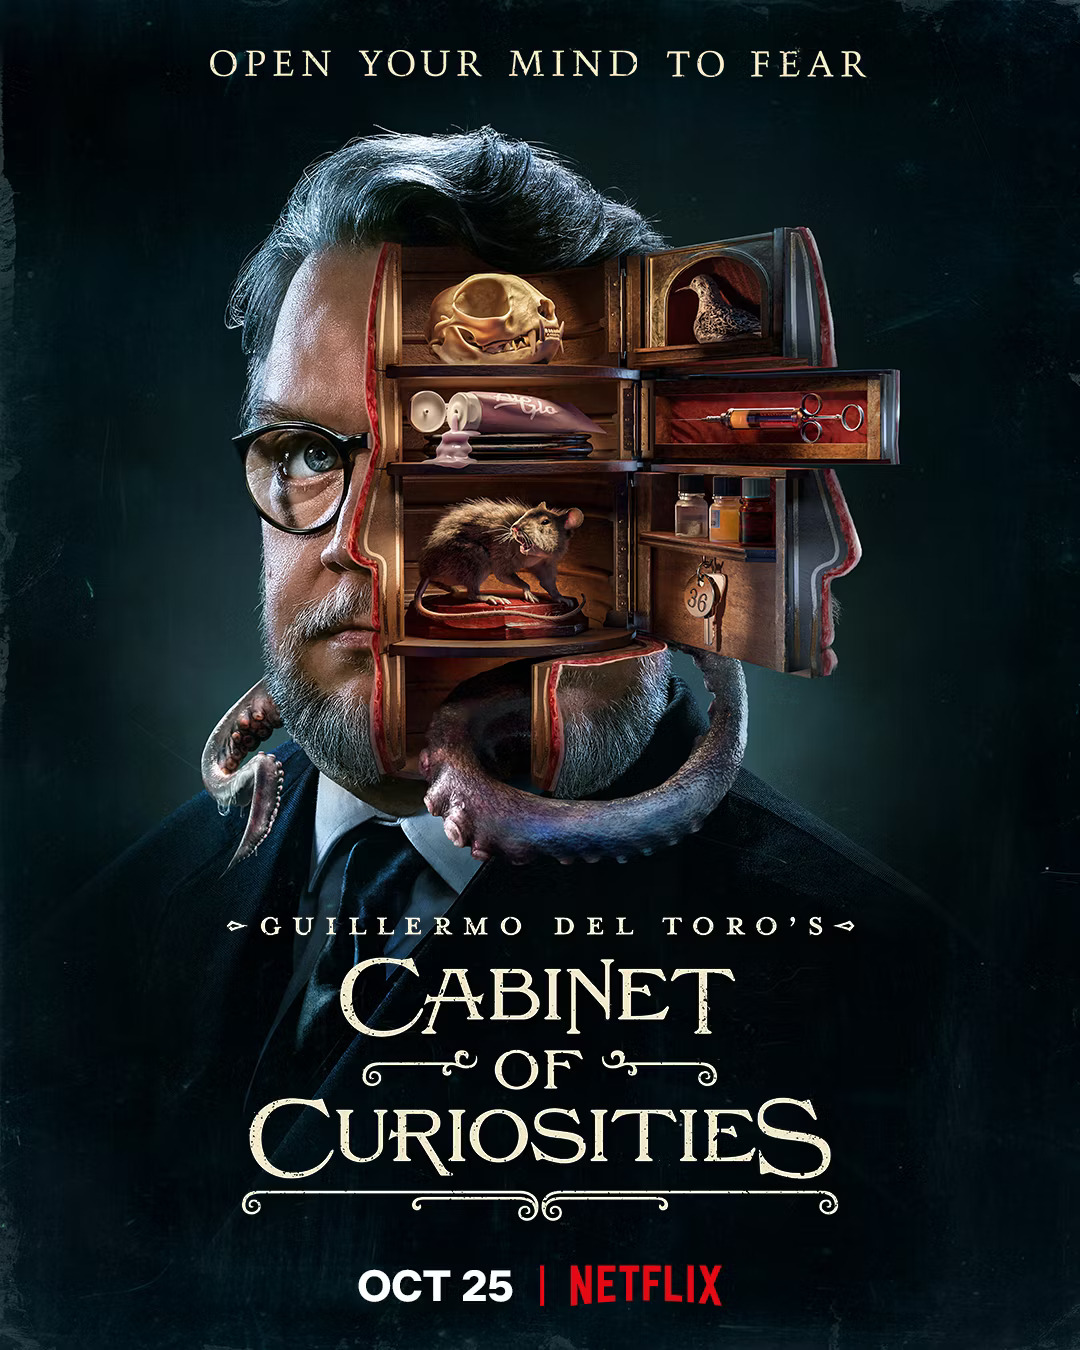 Guillermo del Toro’s Cabinet of Curiosities Season 1 Episode 3